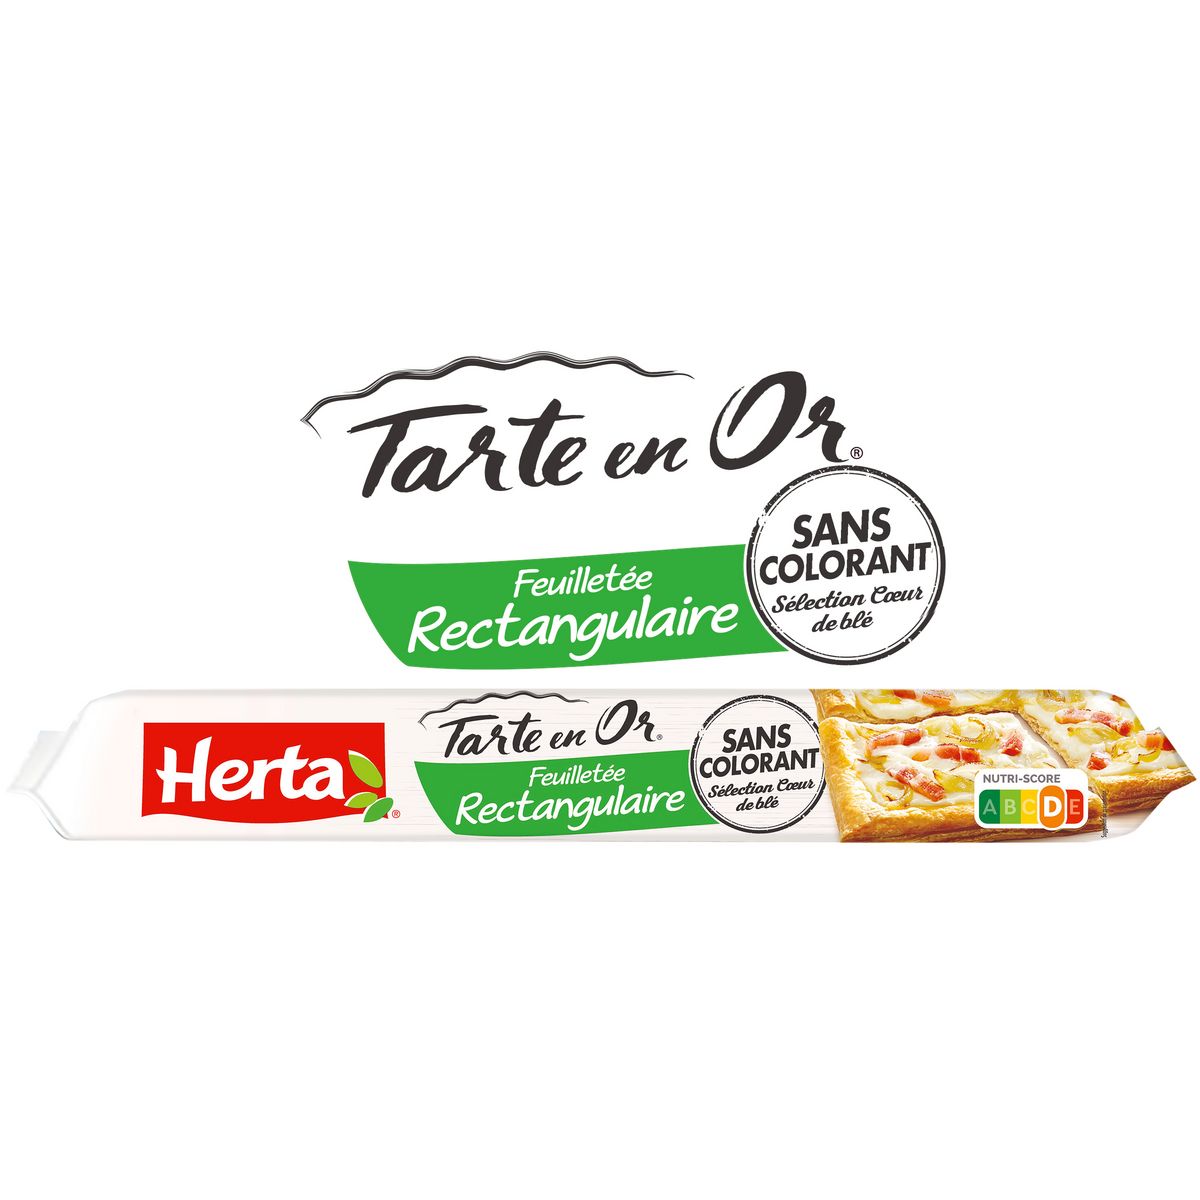 HERTA Tarte en Or pâte feuilletée rectangulaire 230g